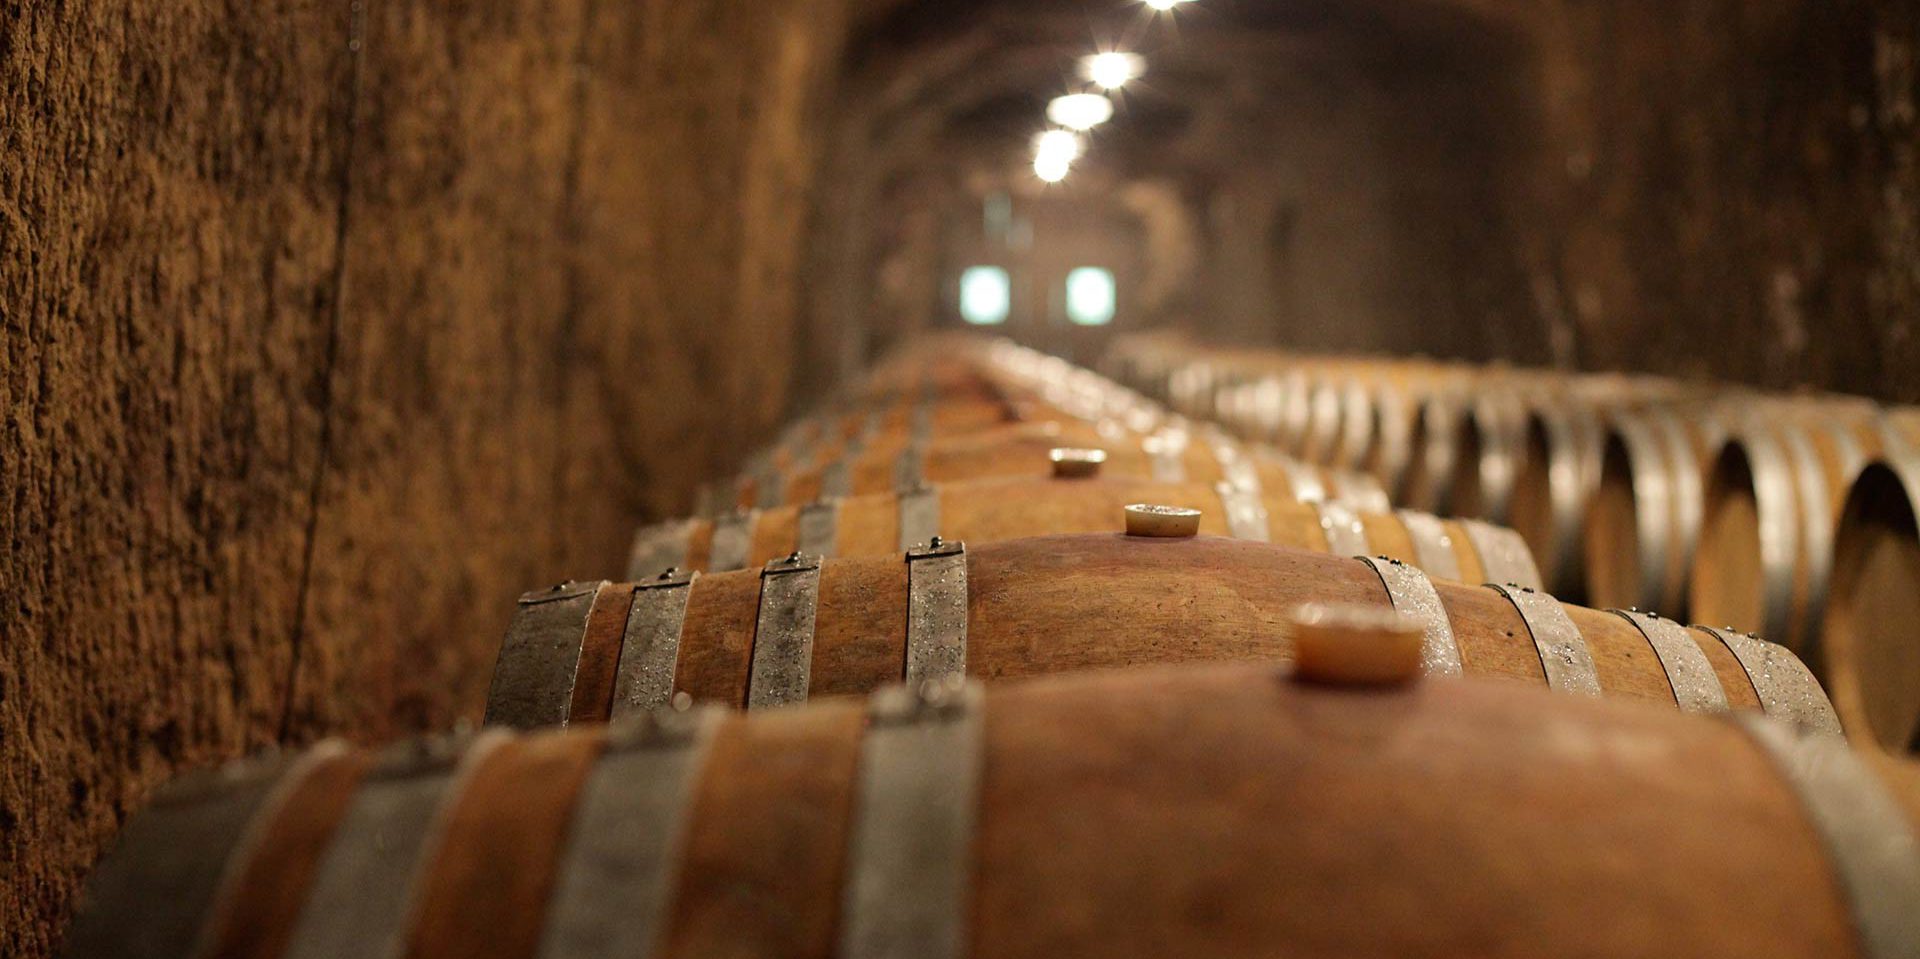 Decugnano dei Barbi is an exellent winery in winery